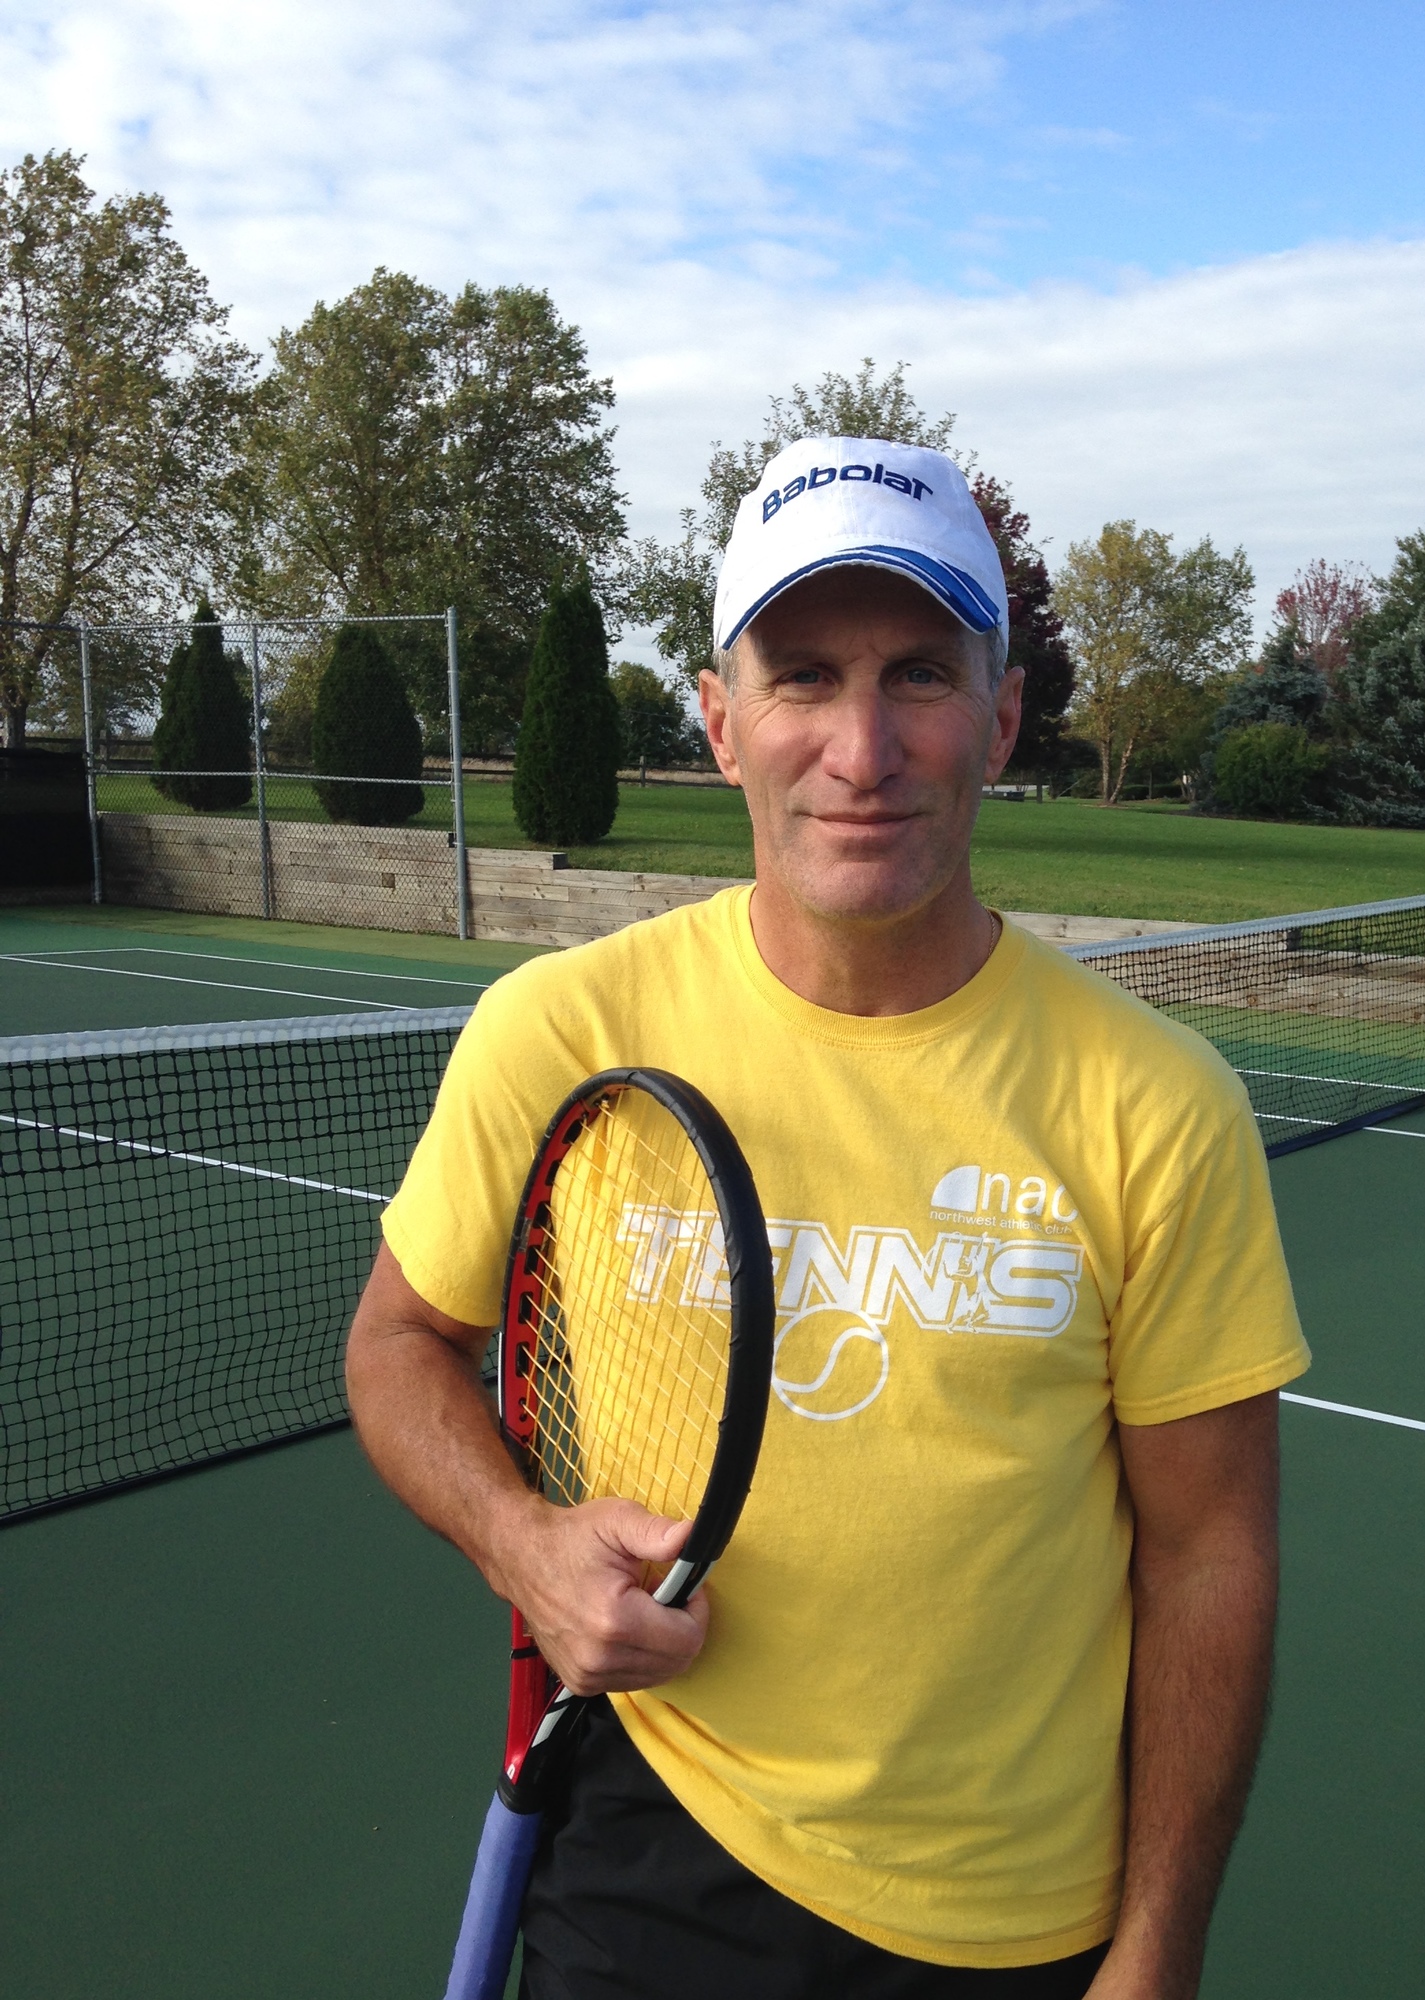 Douglas P. teaches tennis lessons in Sarasota, FL